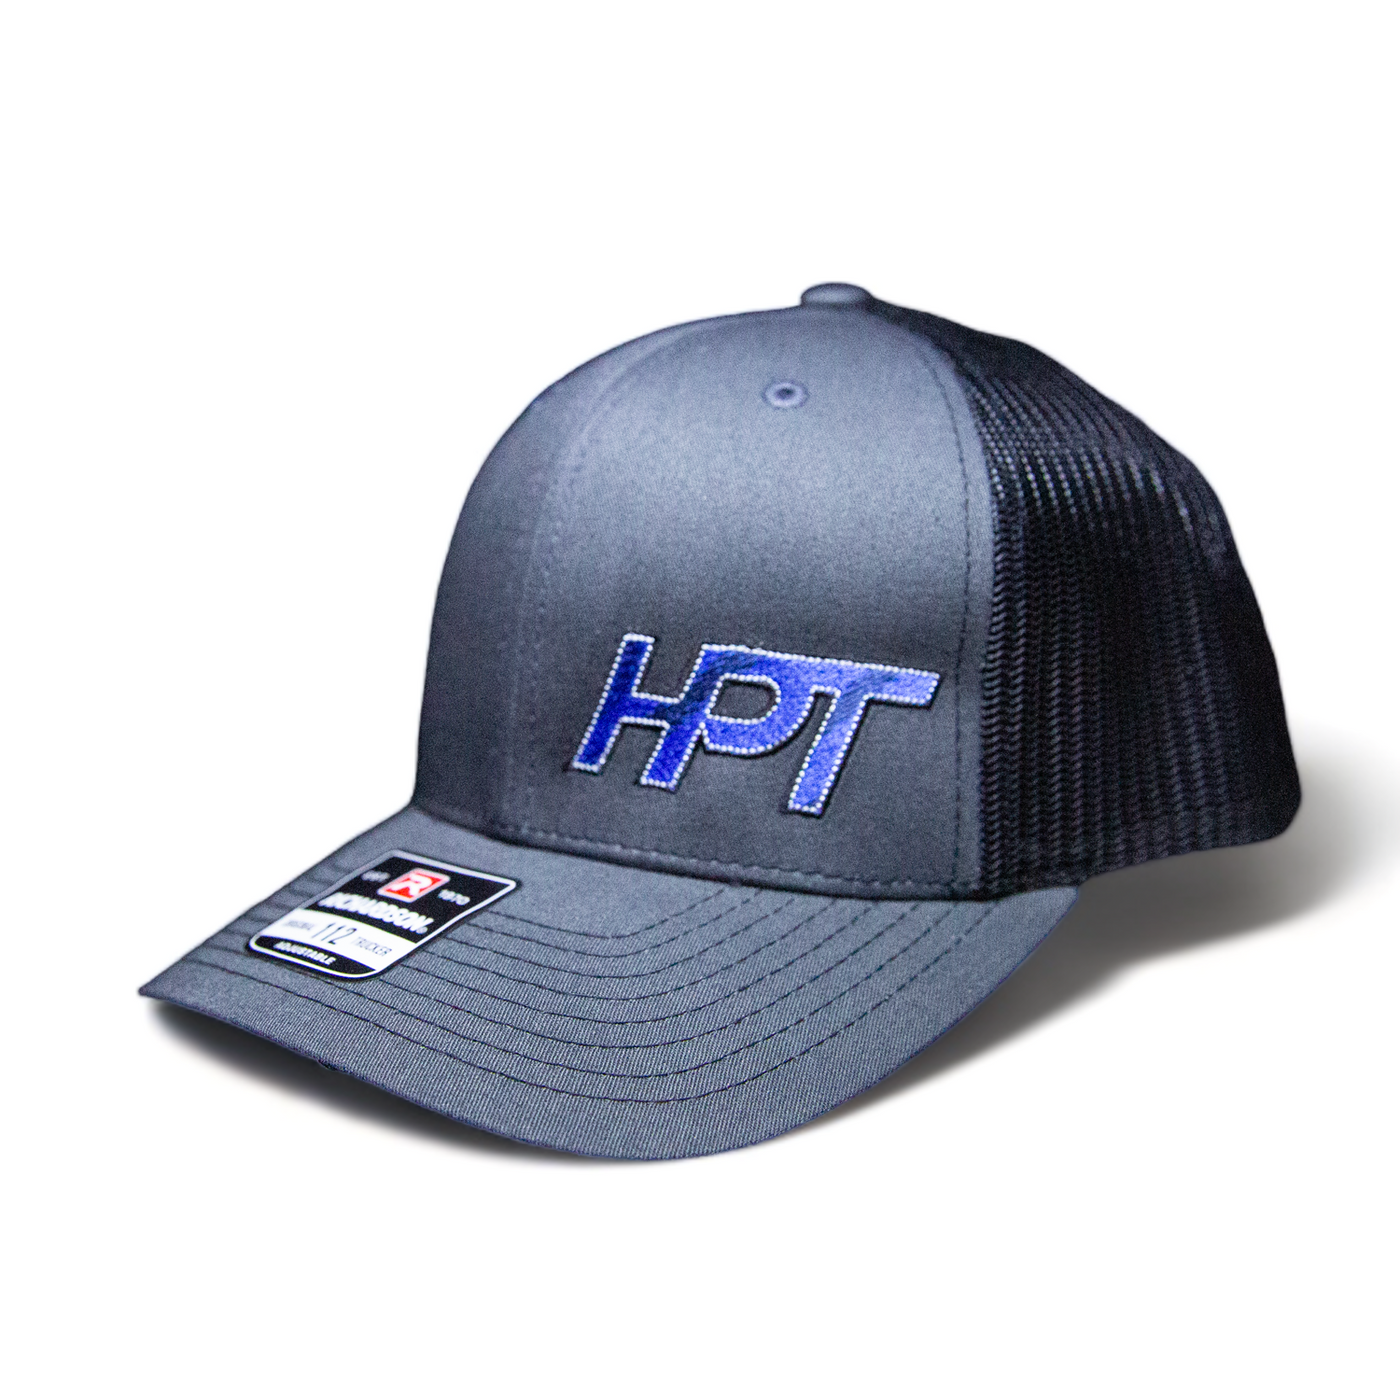 HPT Grey/Black Snapback Hat